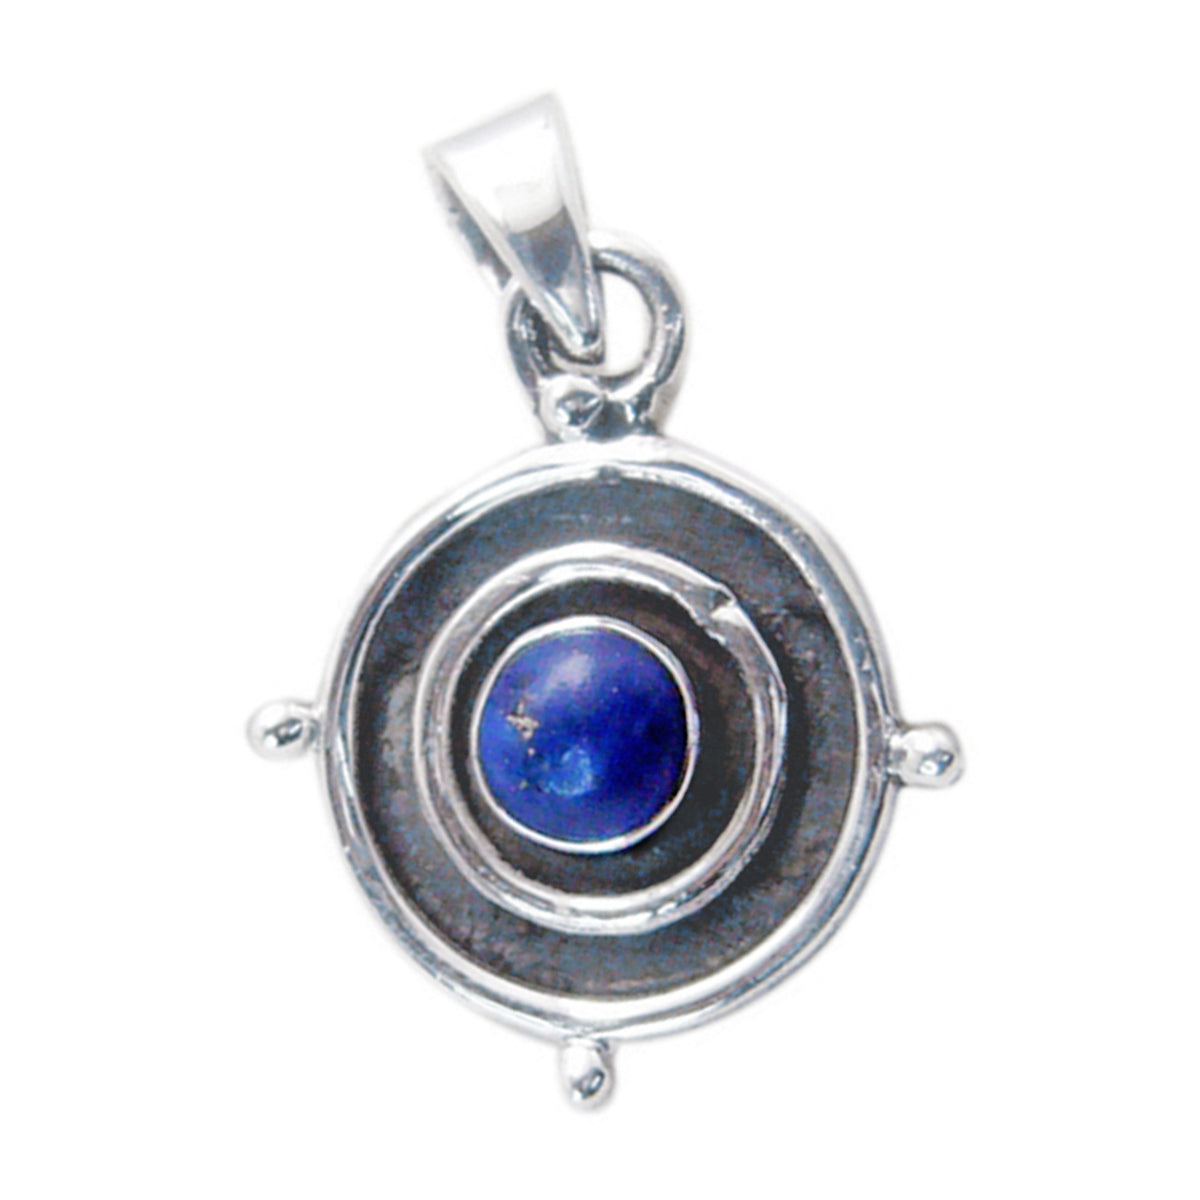 Riyo Beddable Gems Ronde Cabochon Nevy Blue Lapis Lazuli Zilveren Hanger Cadeau voor verloving